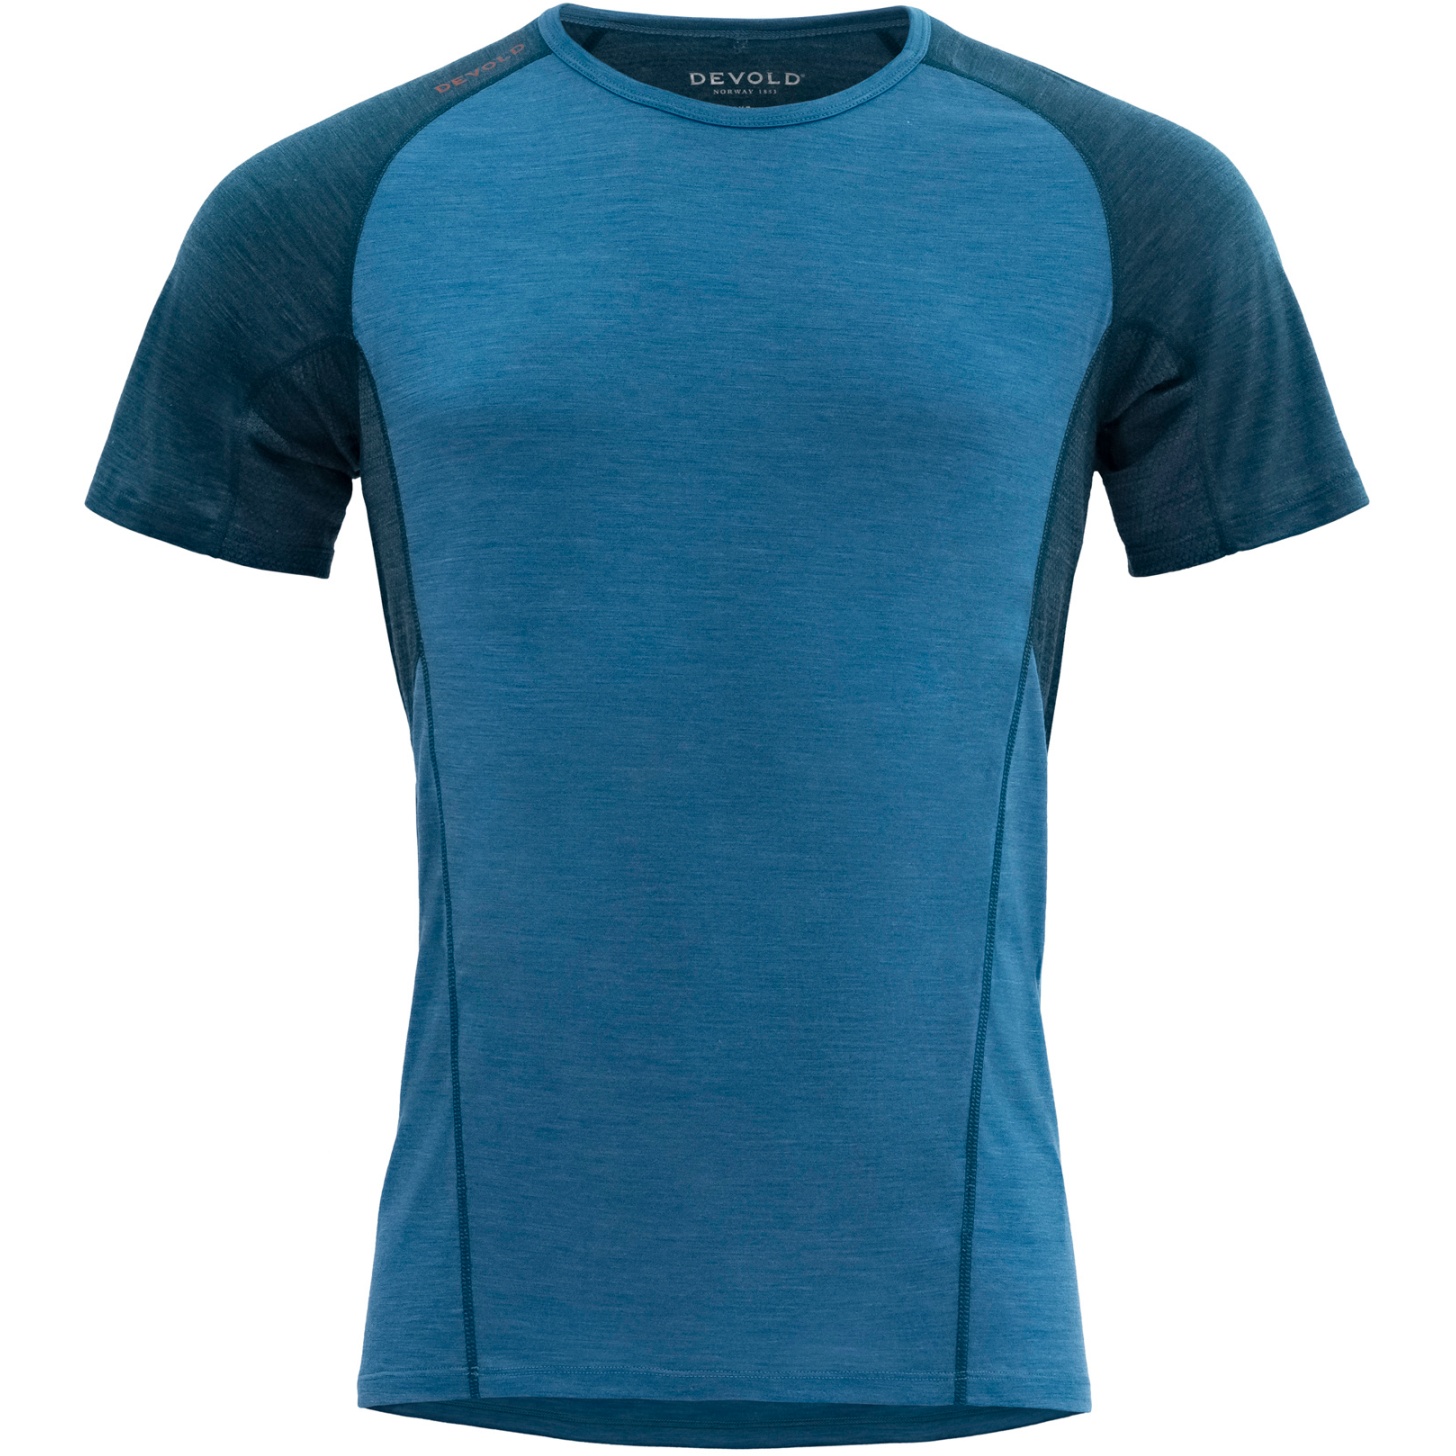 Picture of Devold Running Merino 130 T-Shirt Men - 258 Blue